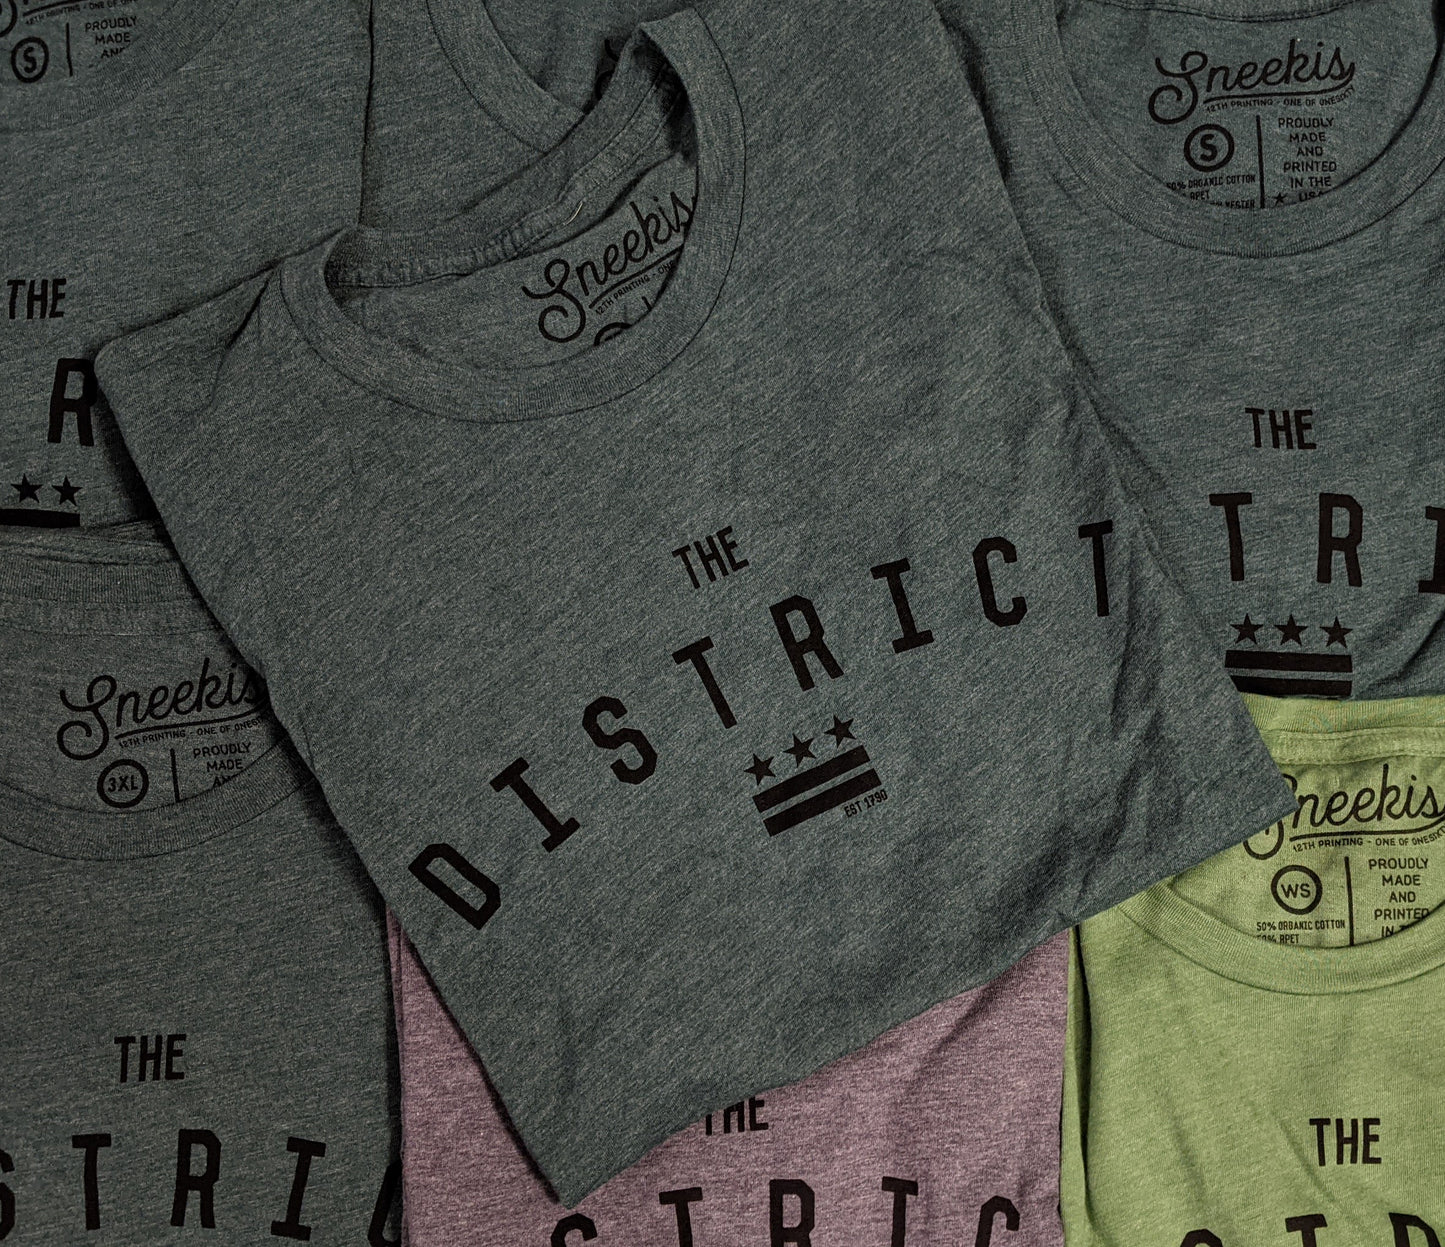 The District - Washington DC Shirt - Pine Green